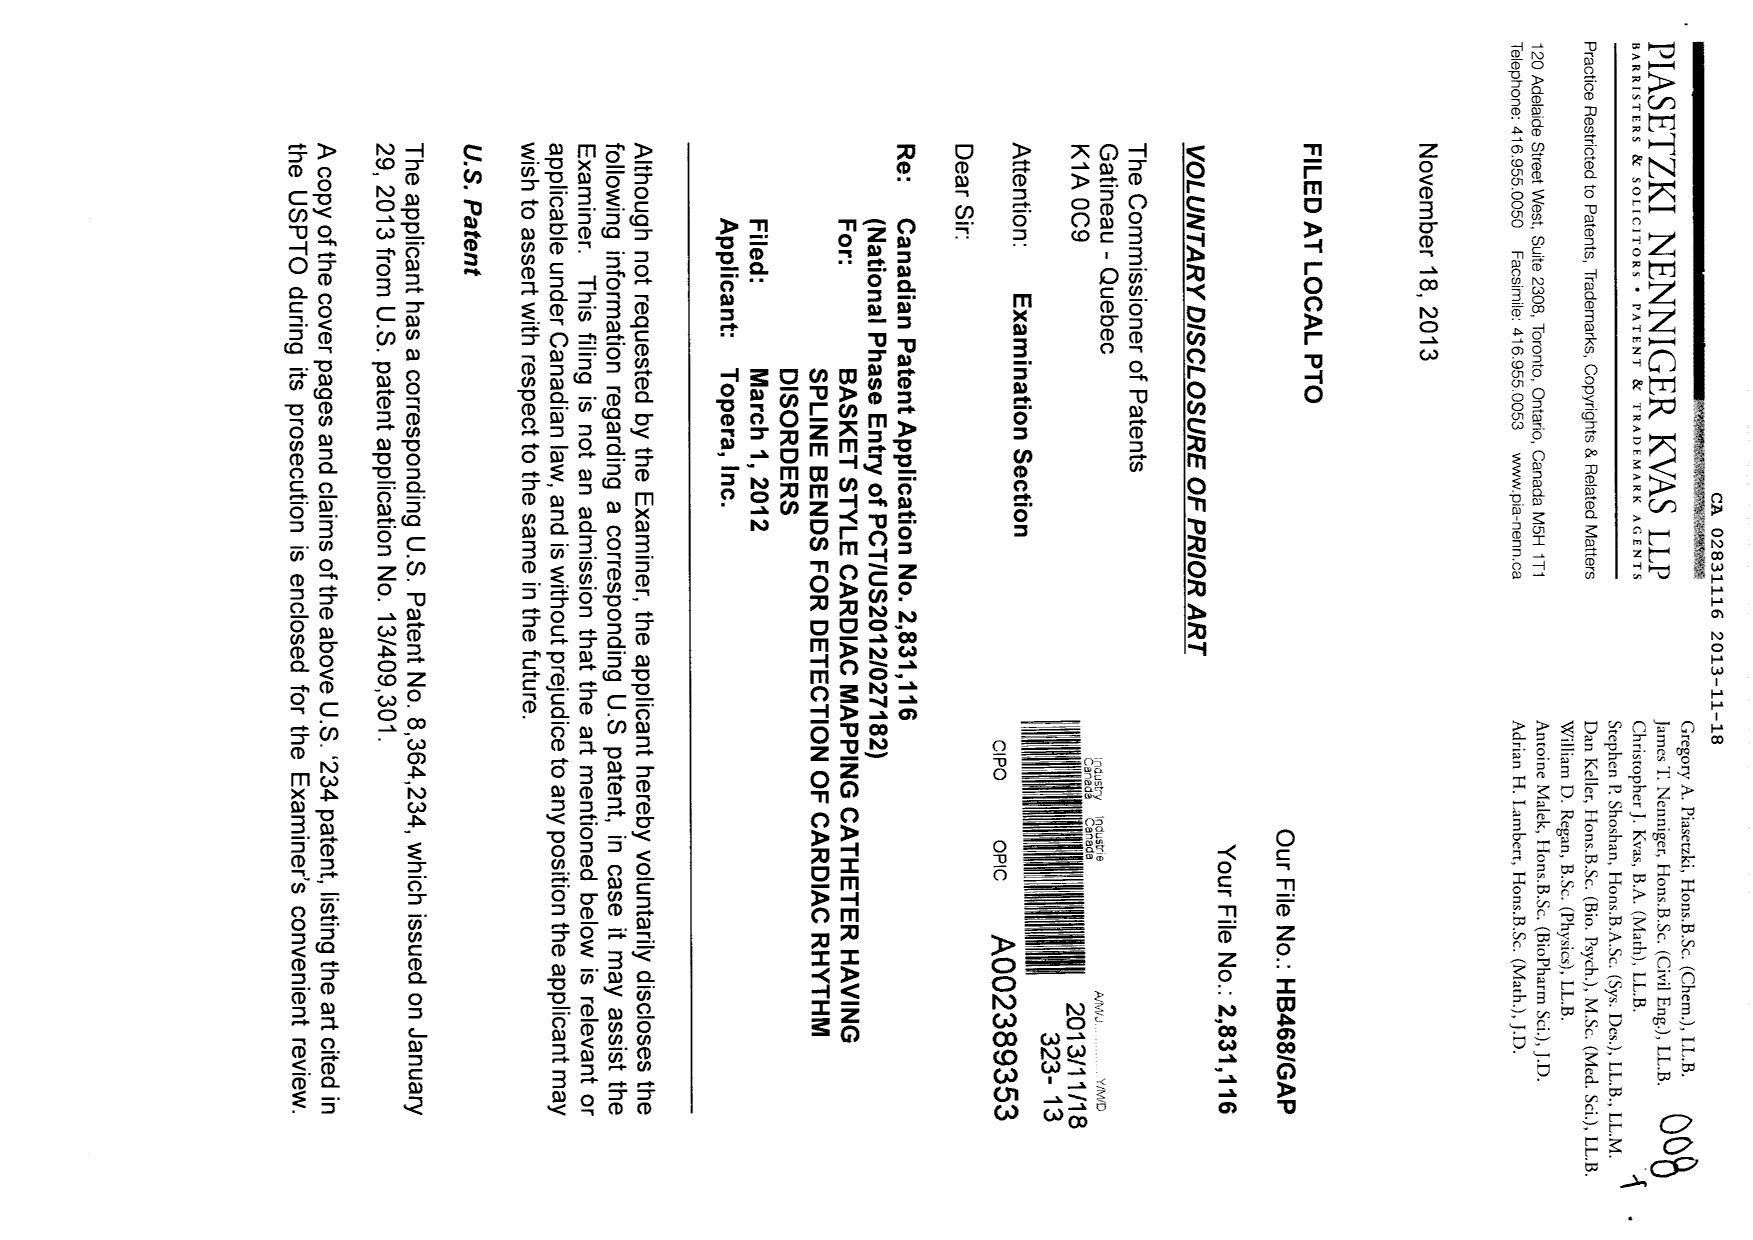 Canadian Patent Document 2831116. Prosecution-Amendment 20131118. Image 1 of 2